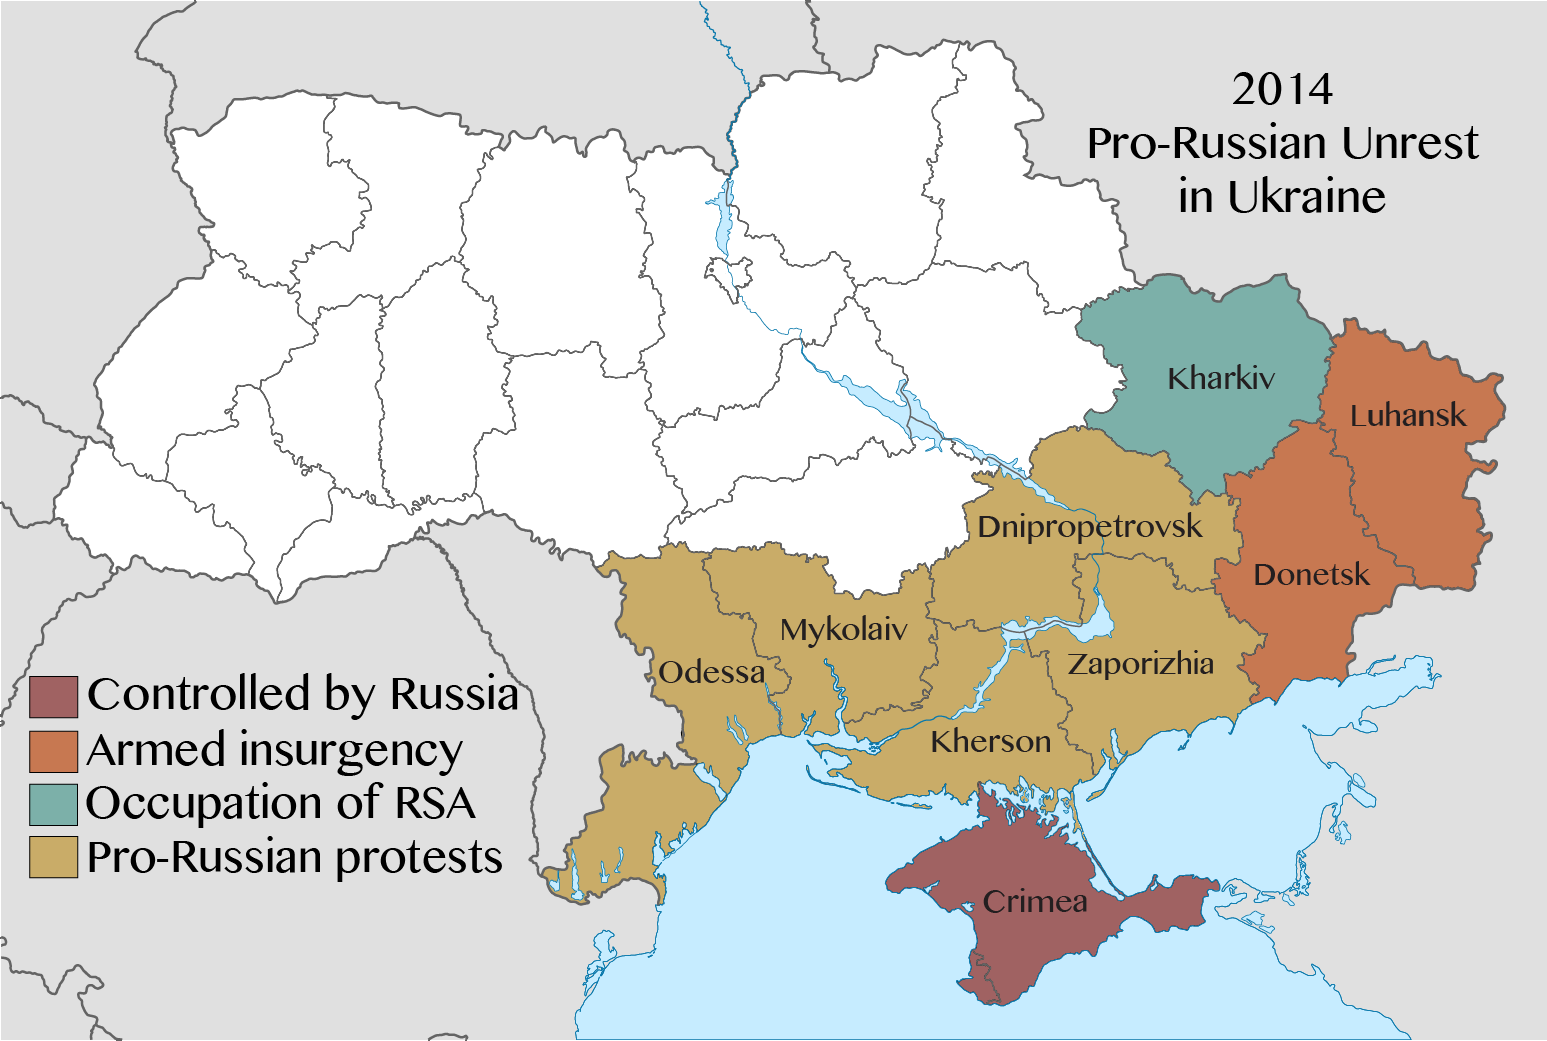 https://upload.wikimedia.org/wikipedia/commons/7/79/2014_pro-Russian_unrest_in_Ukraine.png